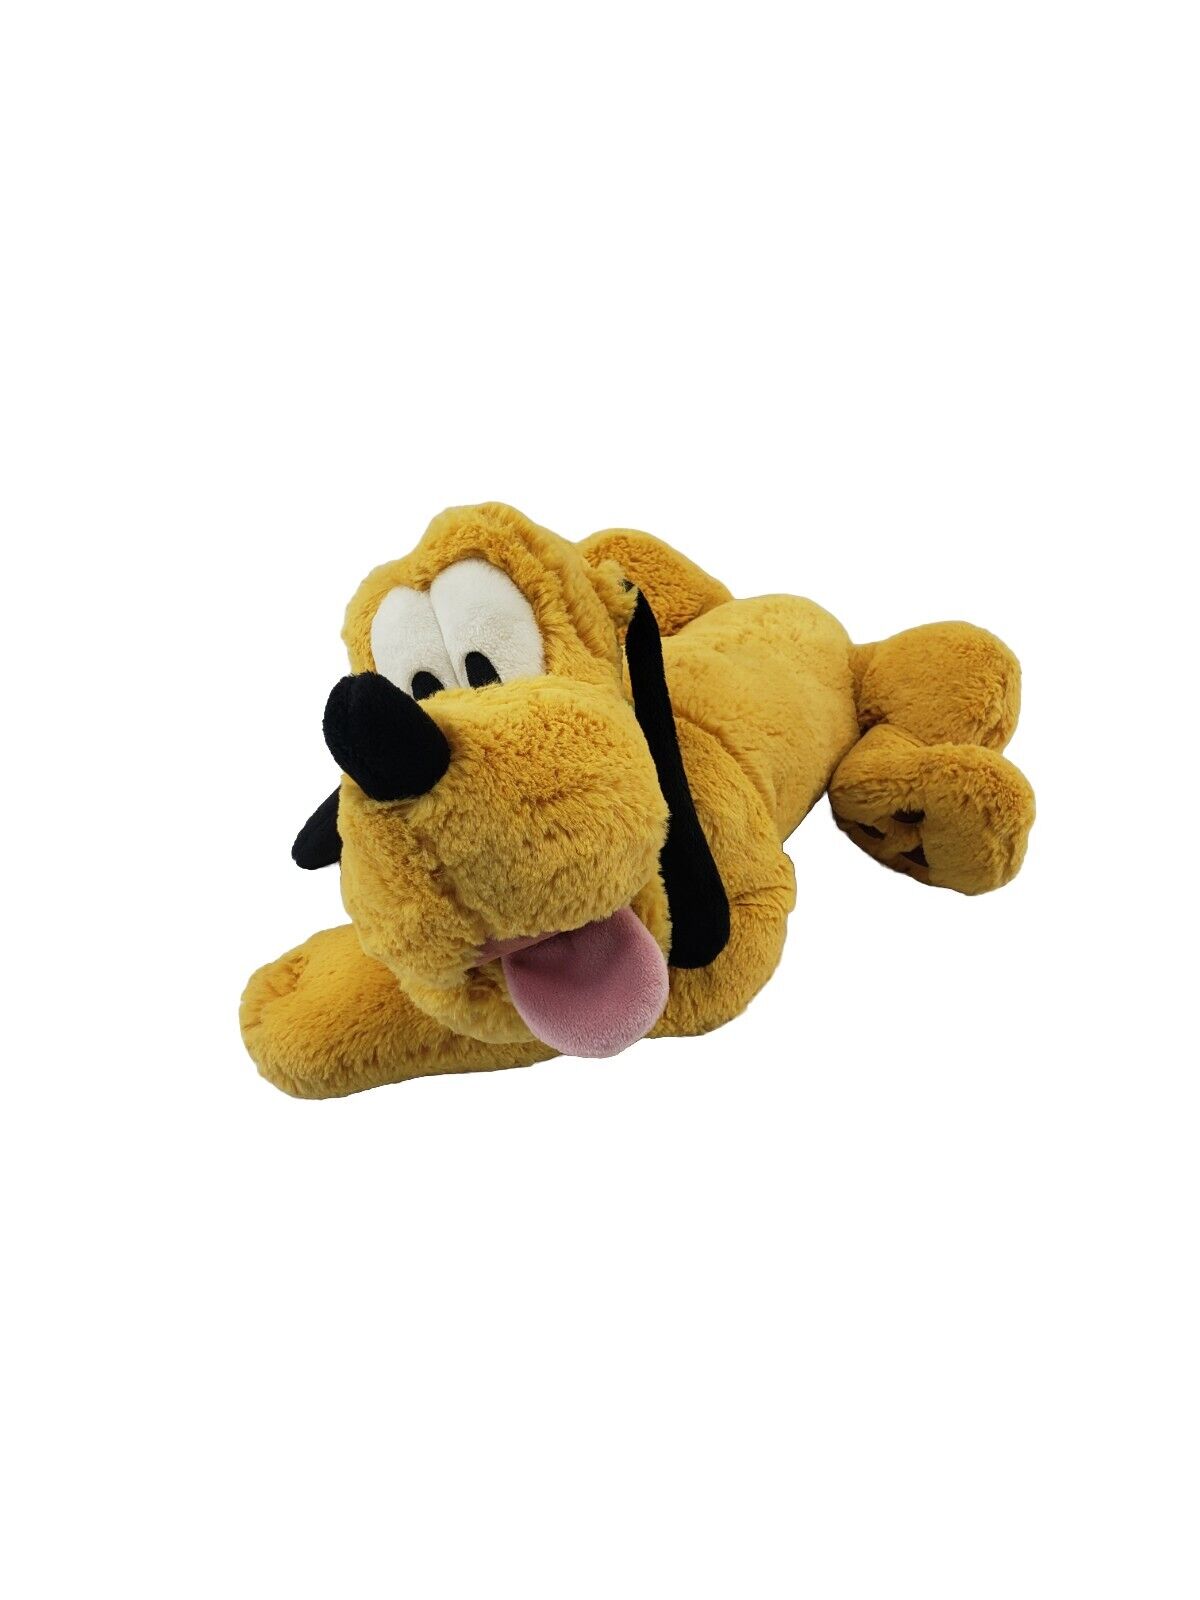 Original Authentic Disney Store Pluto Plush Stuffed Animal Soft